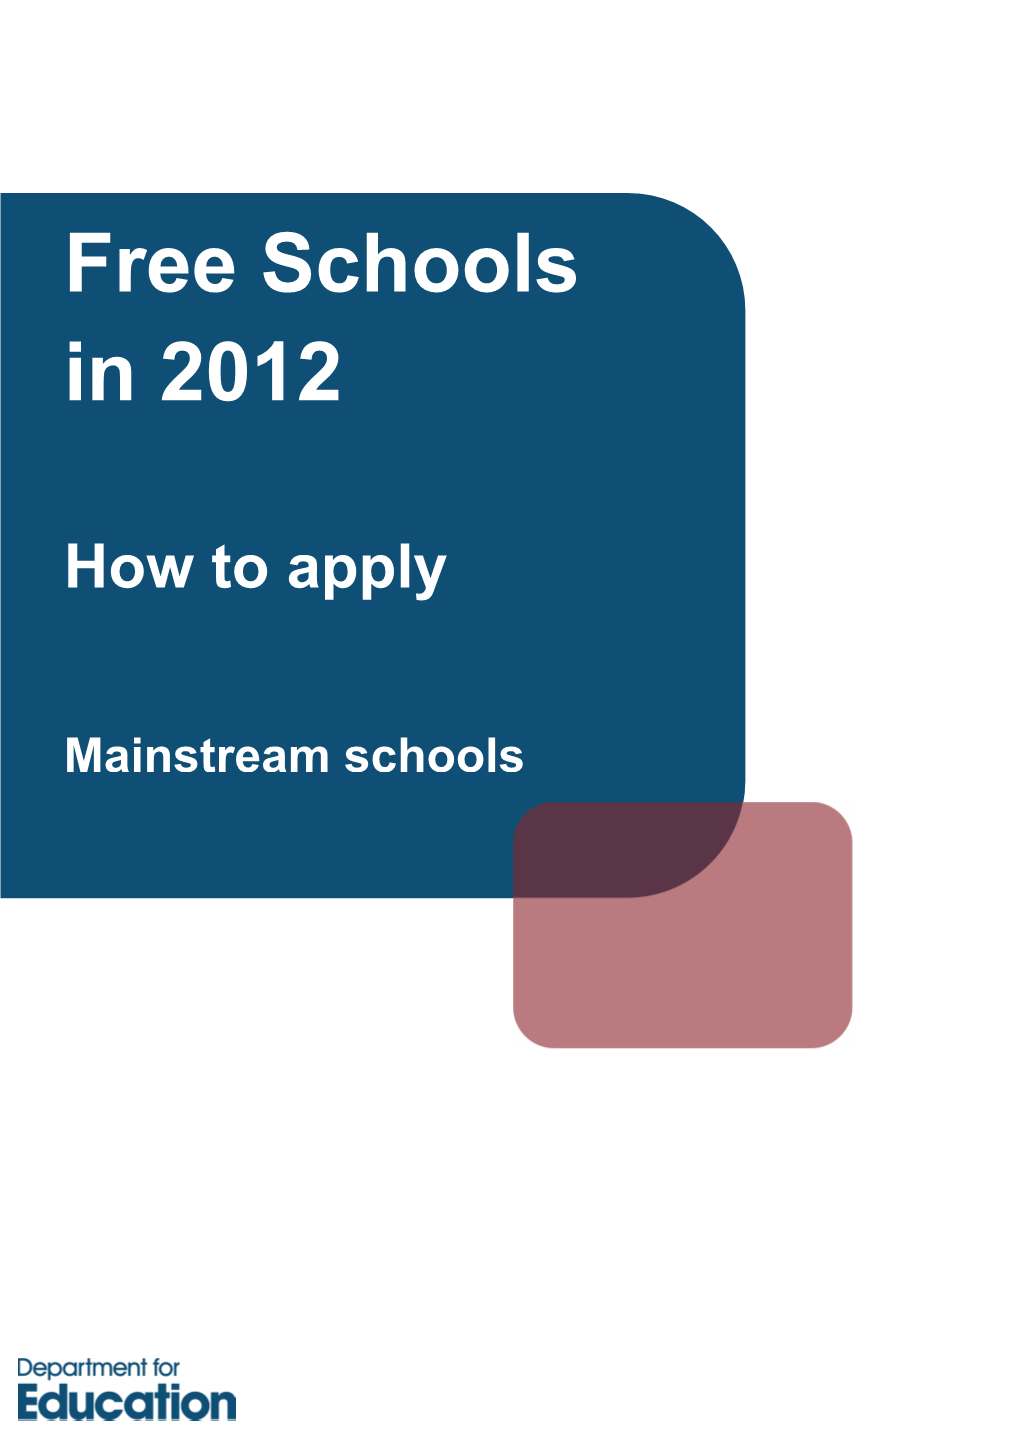 Free Schools in 2012